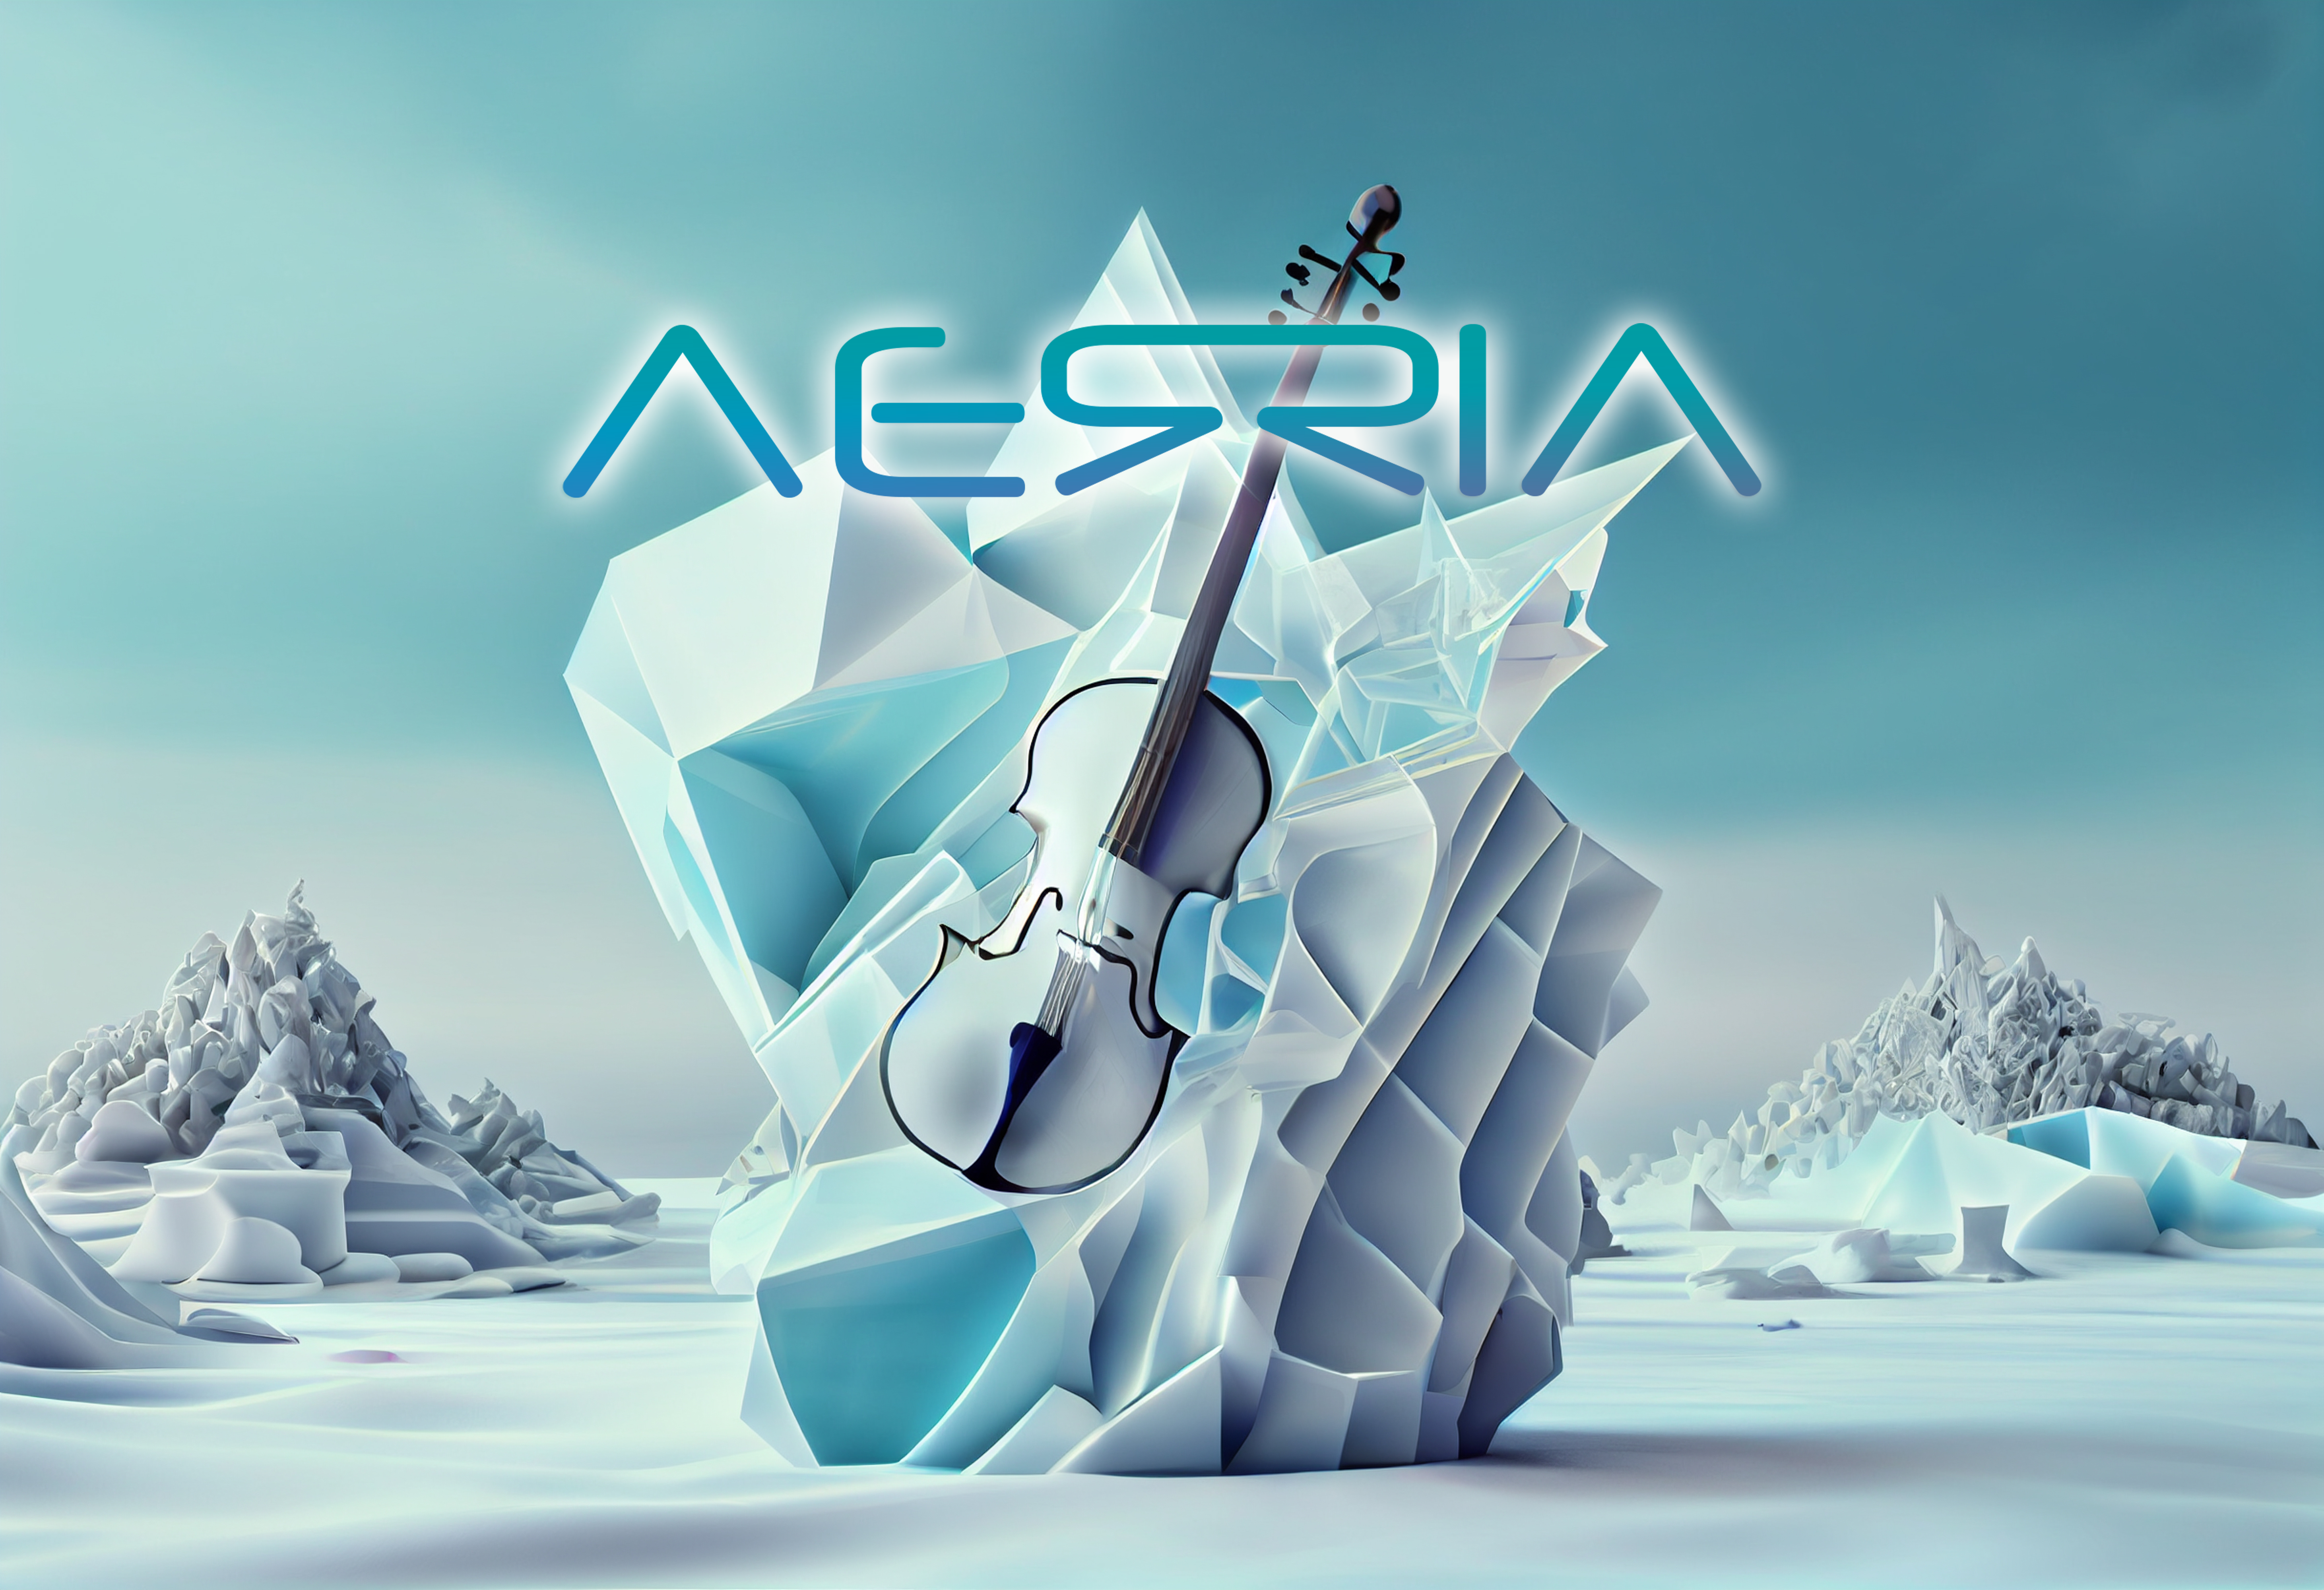 AERRIA – Soundscapes One